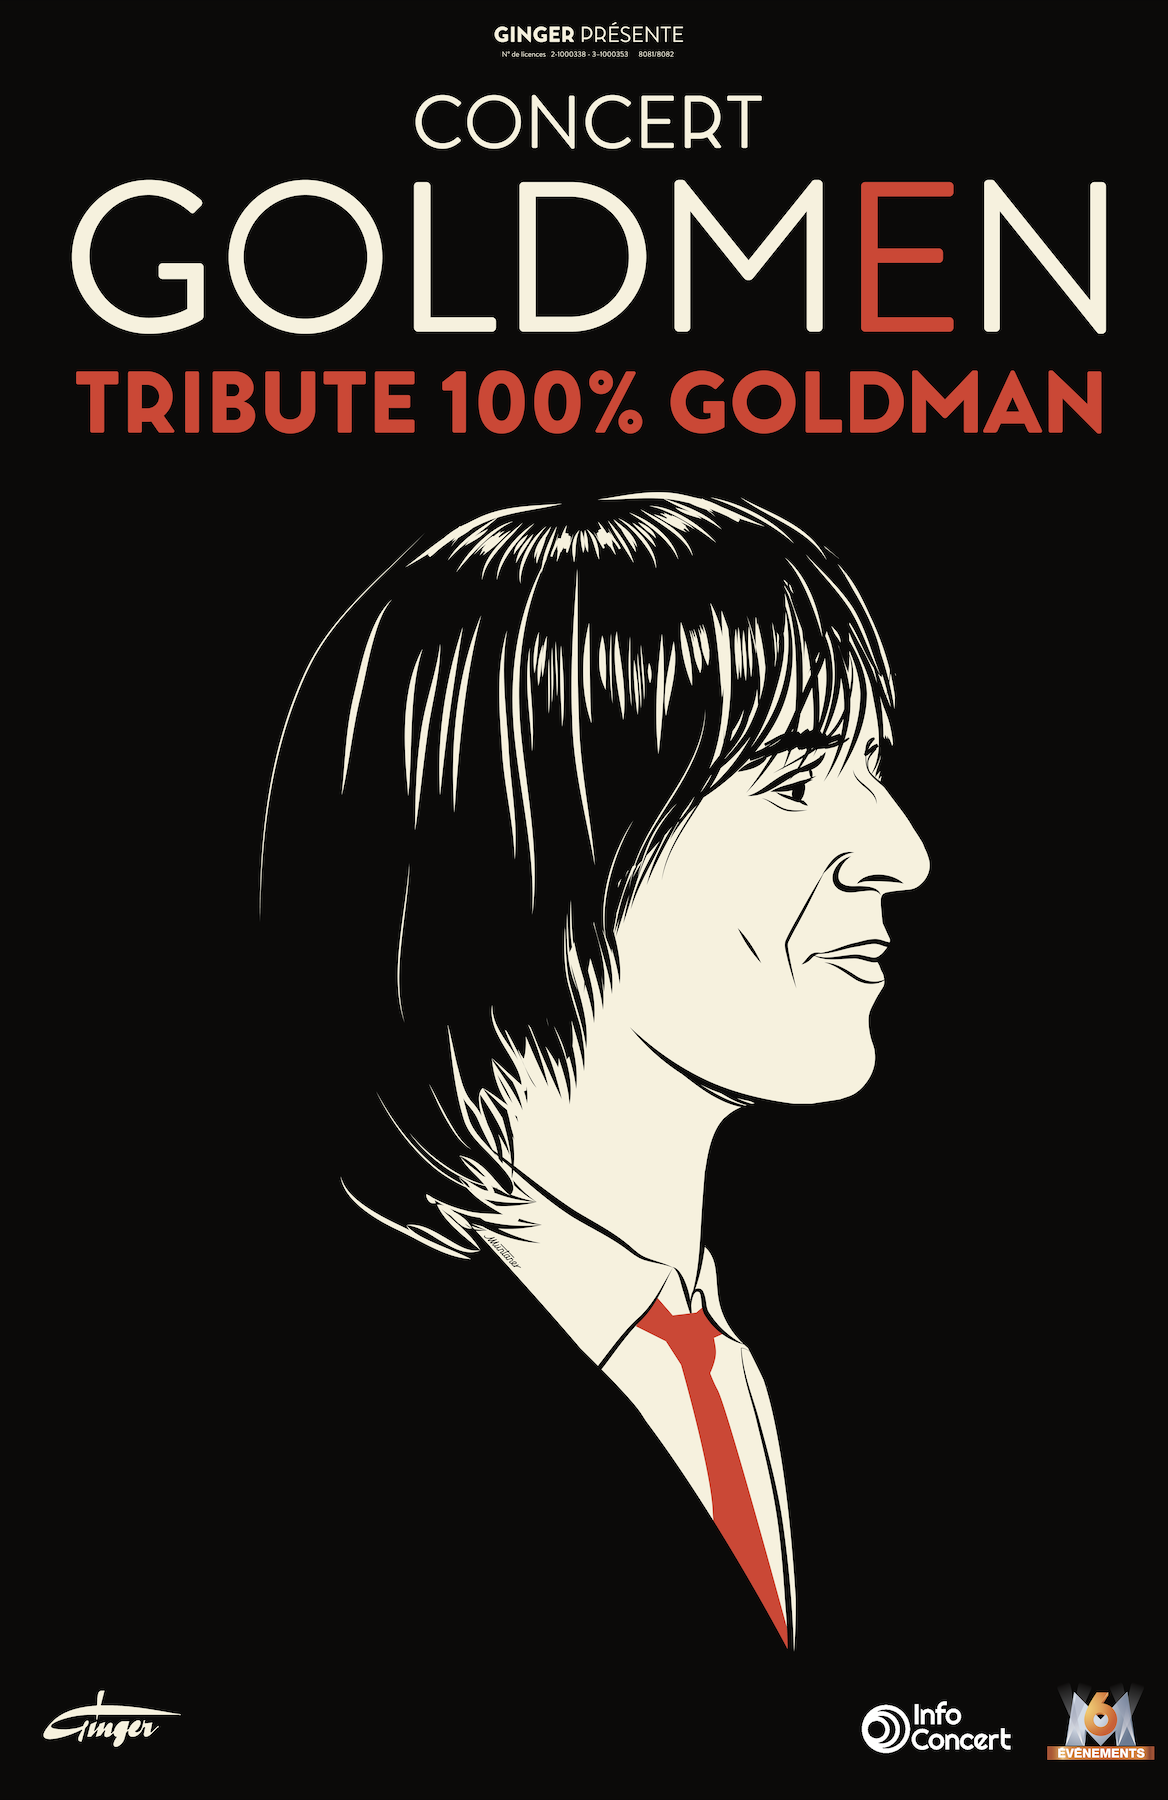 Goldmen Tribute 100 Goldman in der Centre des Congres Agen Tickets